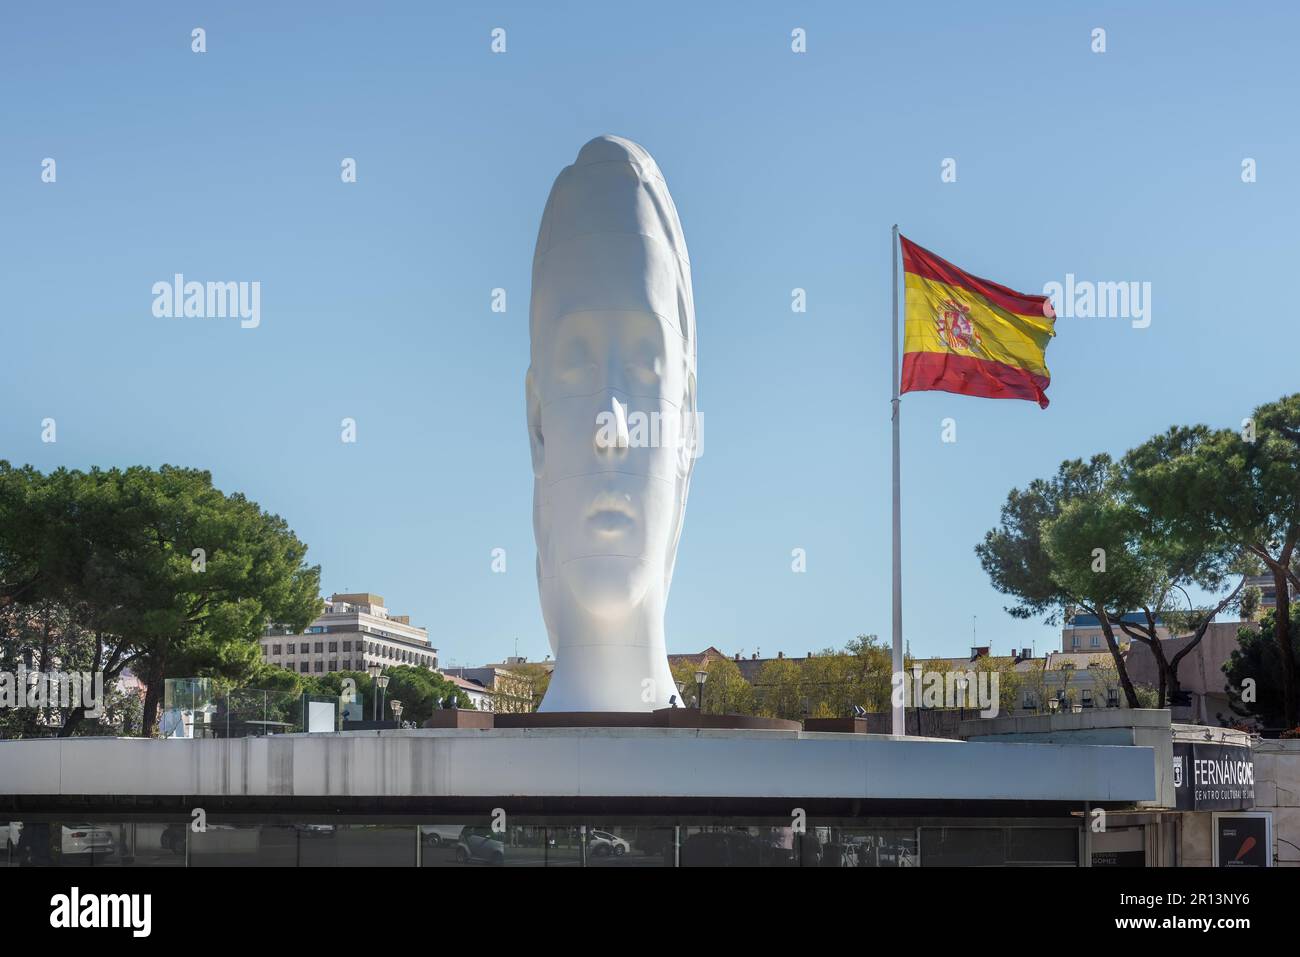 Fernan Gomez Centro Cultural de la Villa avec Julia Sculpture par Jaume Plensa, 2018 - Madrid, Espagne Banque D'Images